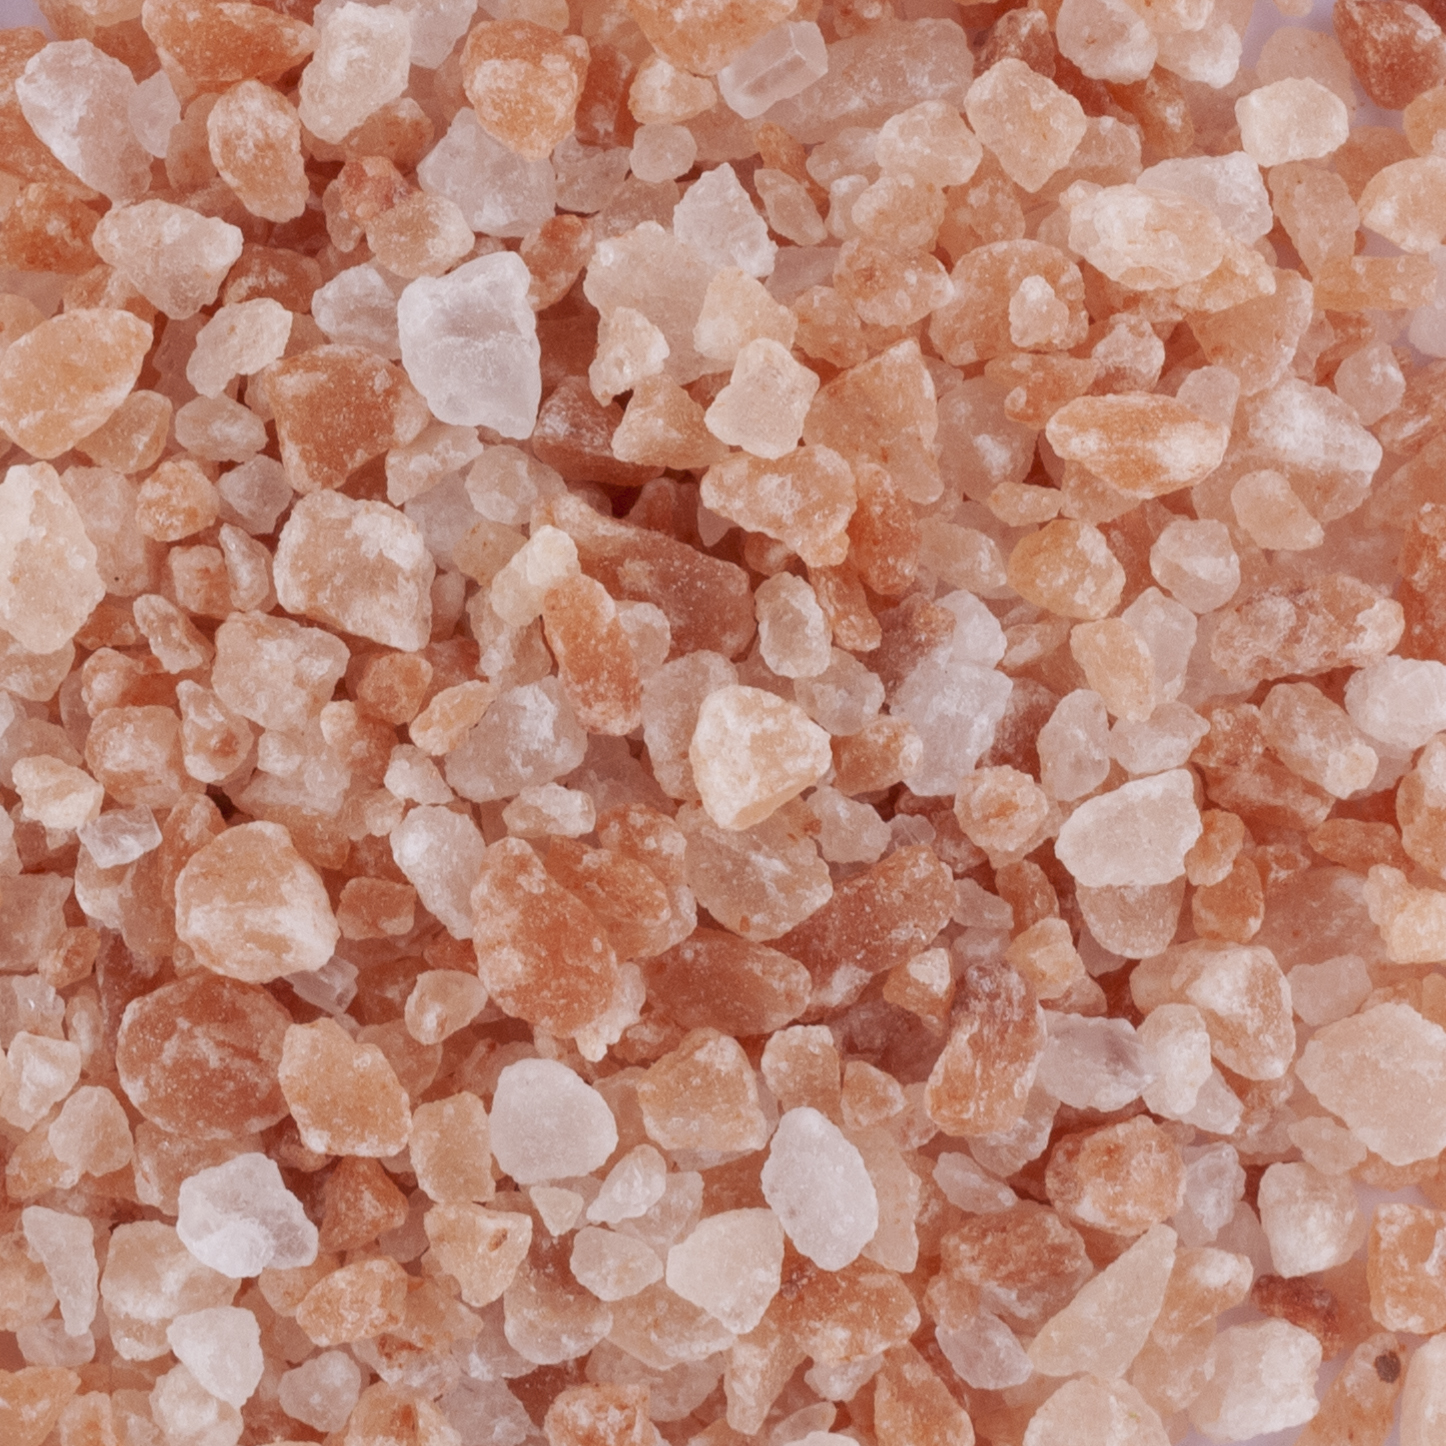 Acheter du sel rose de l'Himalaya en ligne